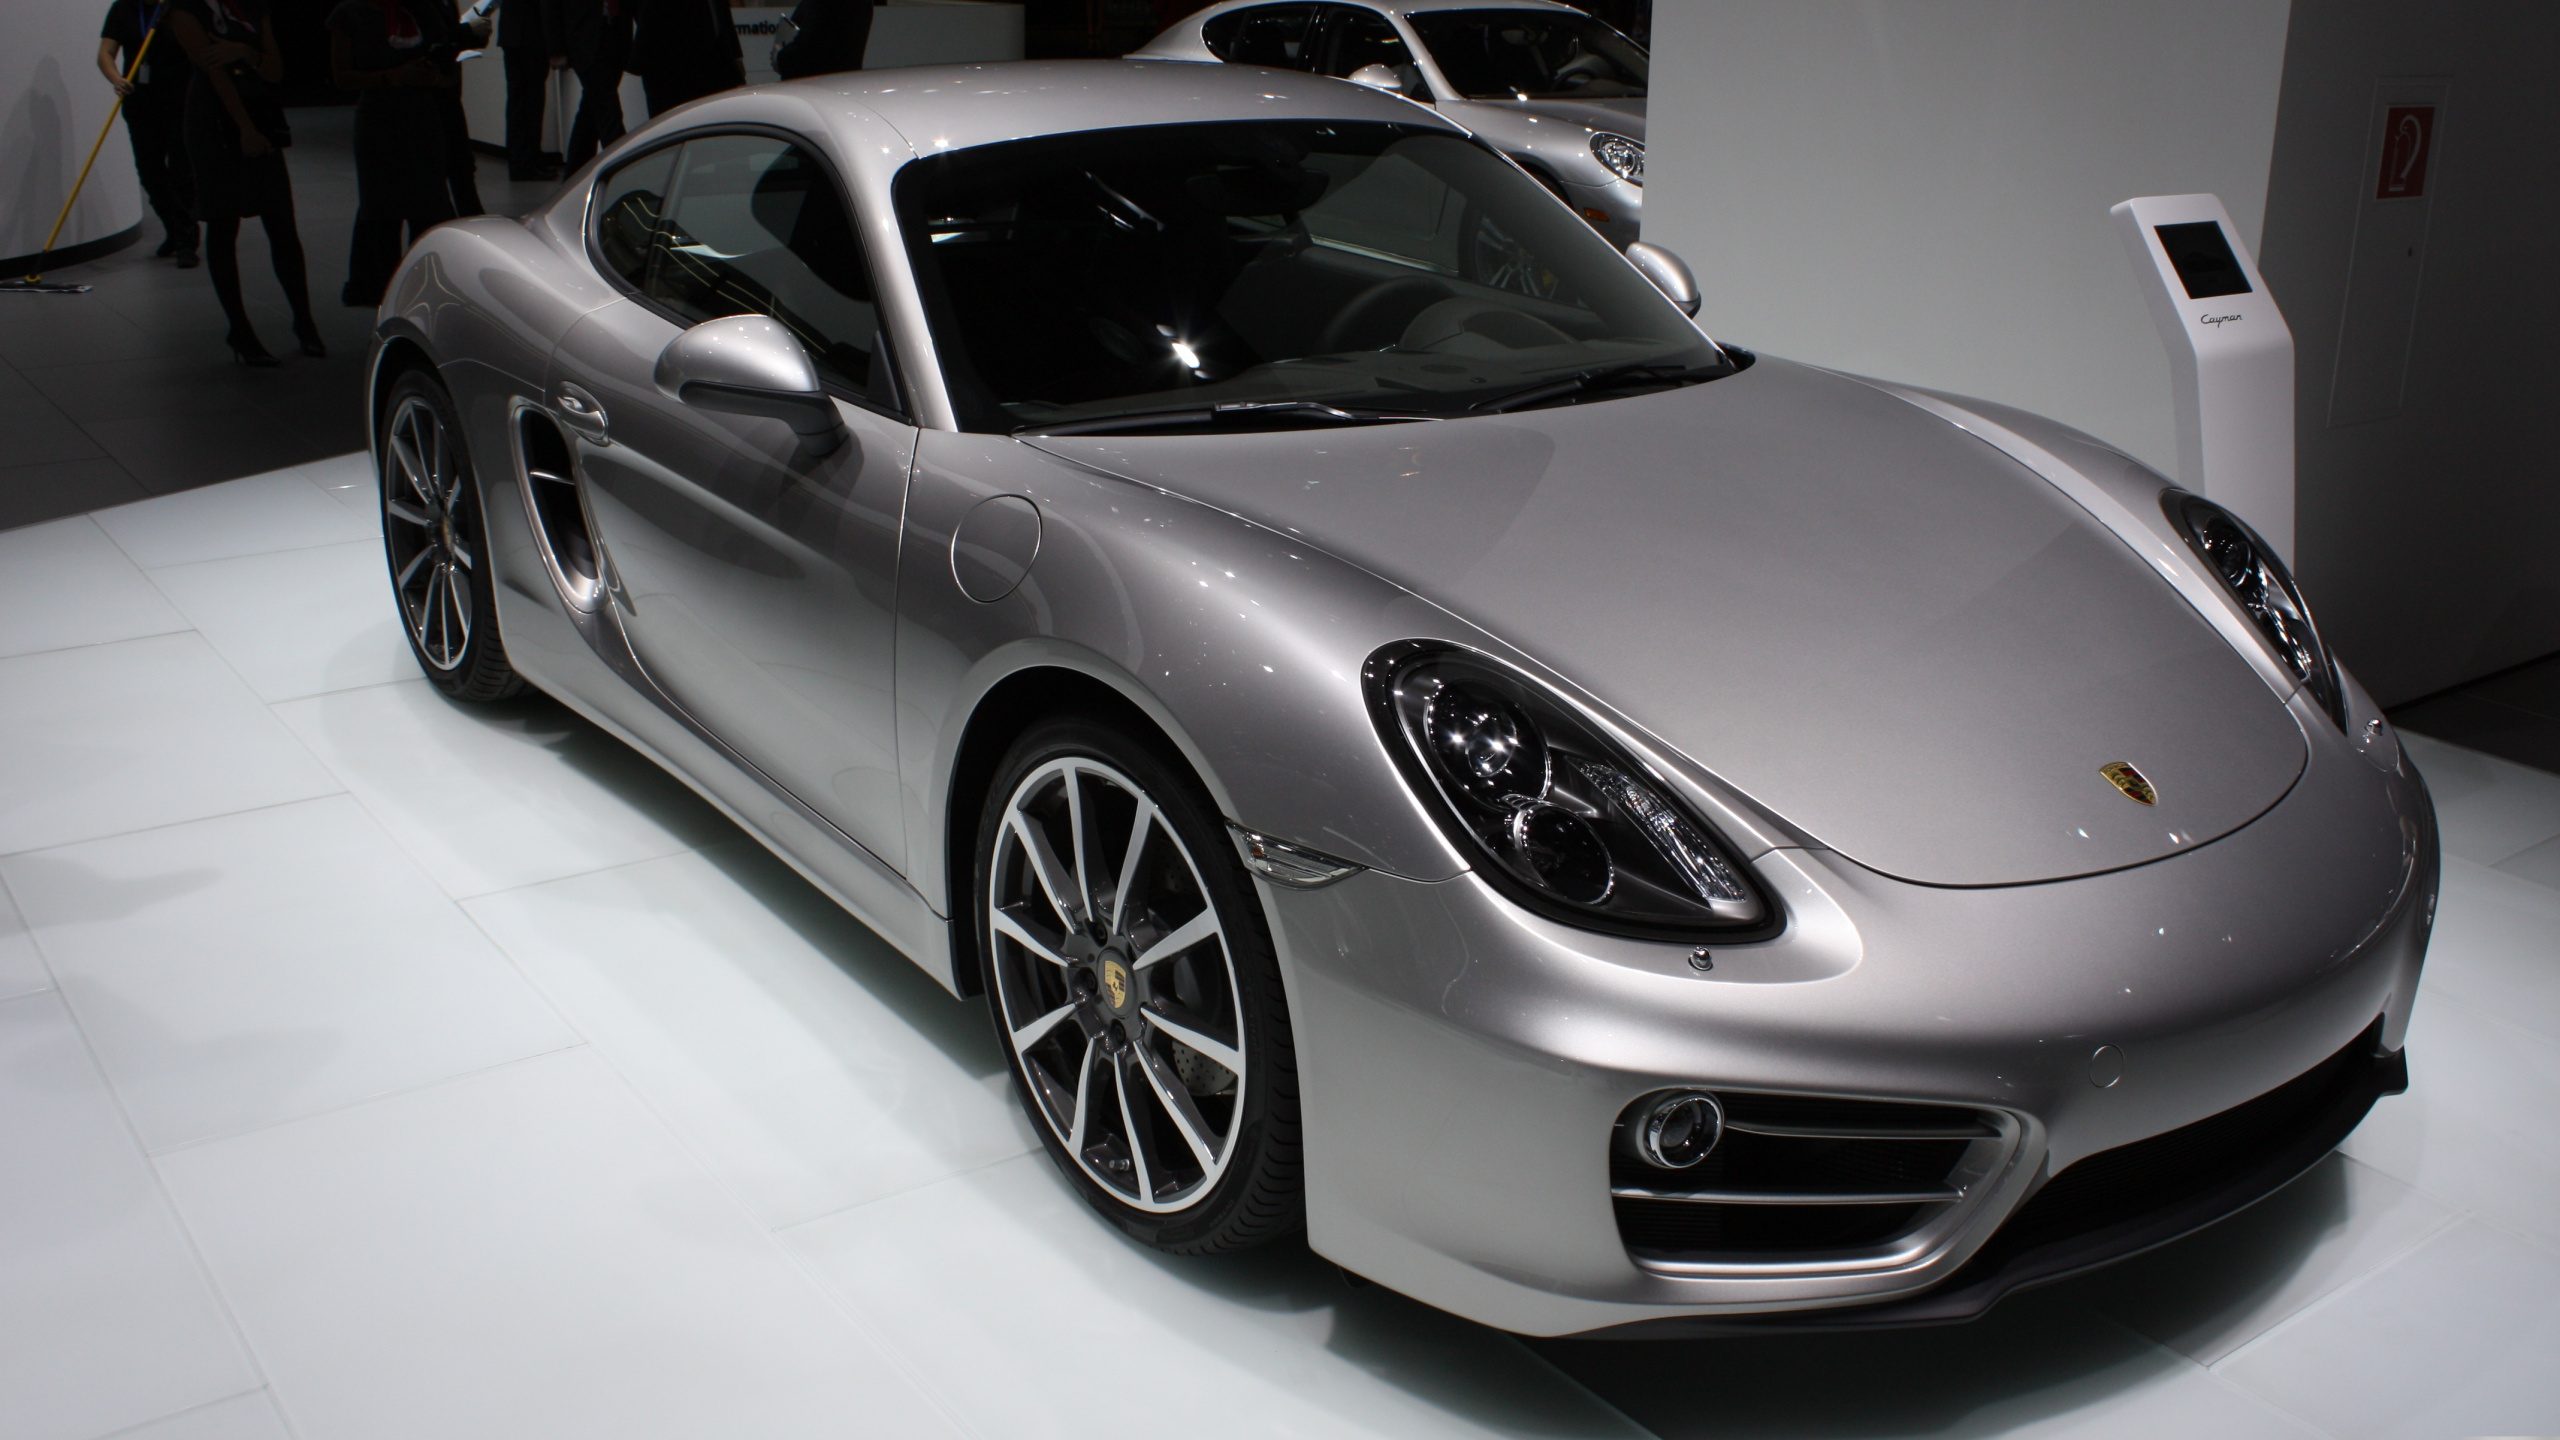 Silver Porsche 911 Parked in a Room. Wallpaper in 2560x1440 Resolution